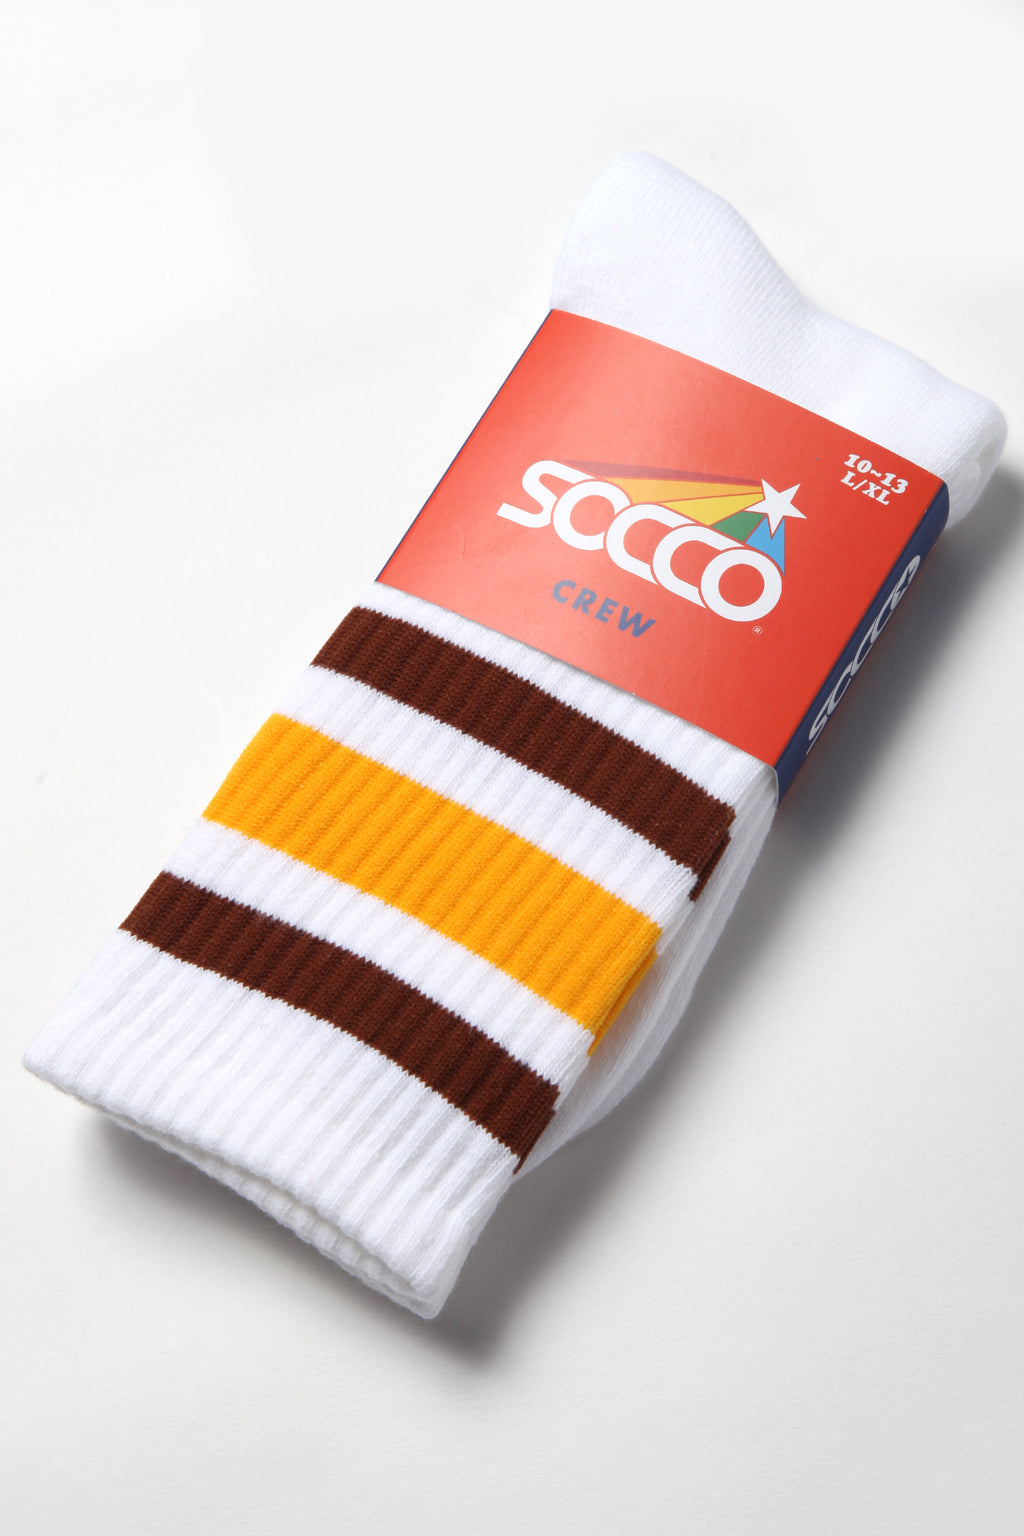 Socco - Striped Crew Socks - Brown/Yellow/White